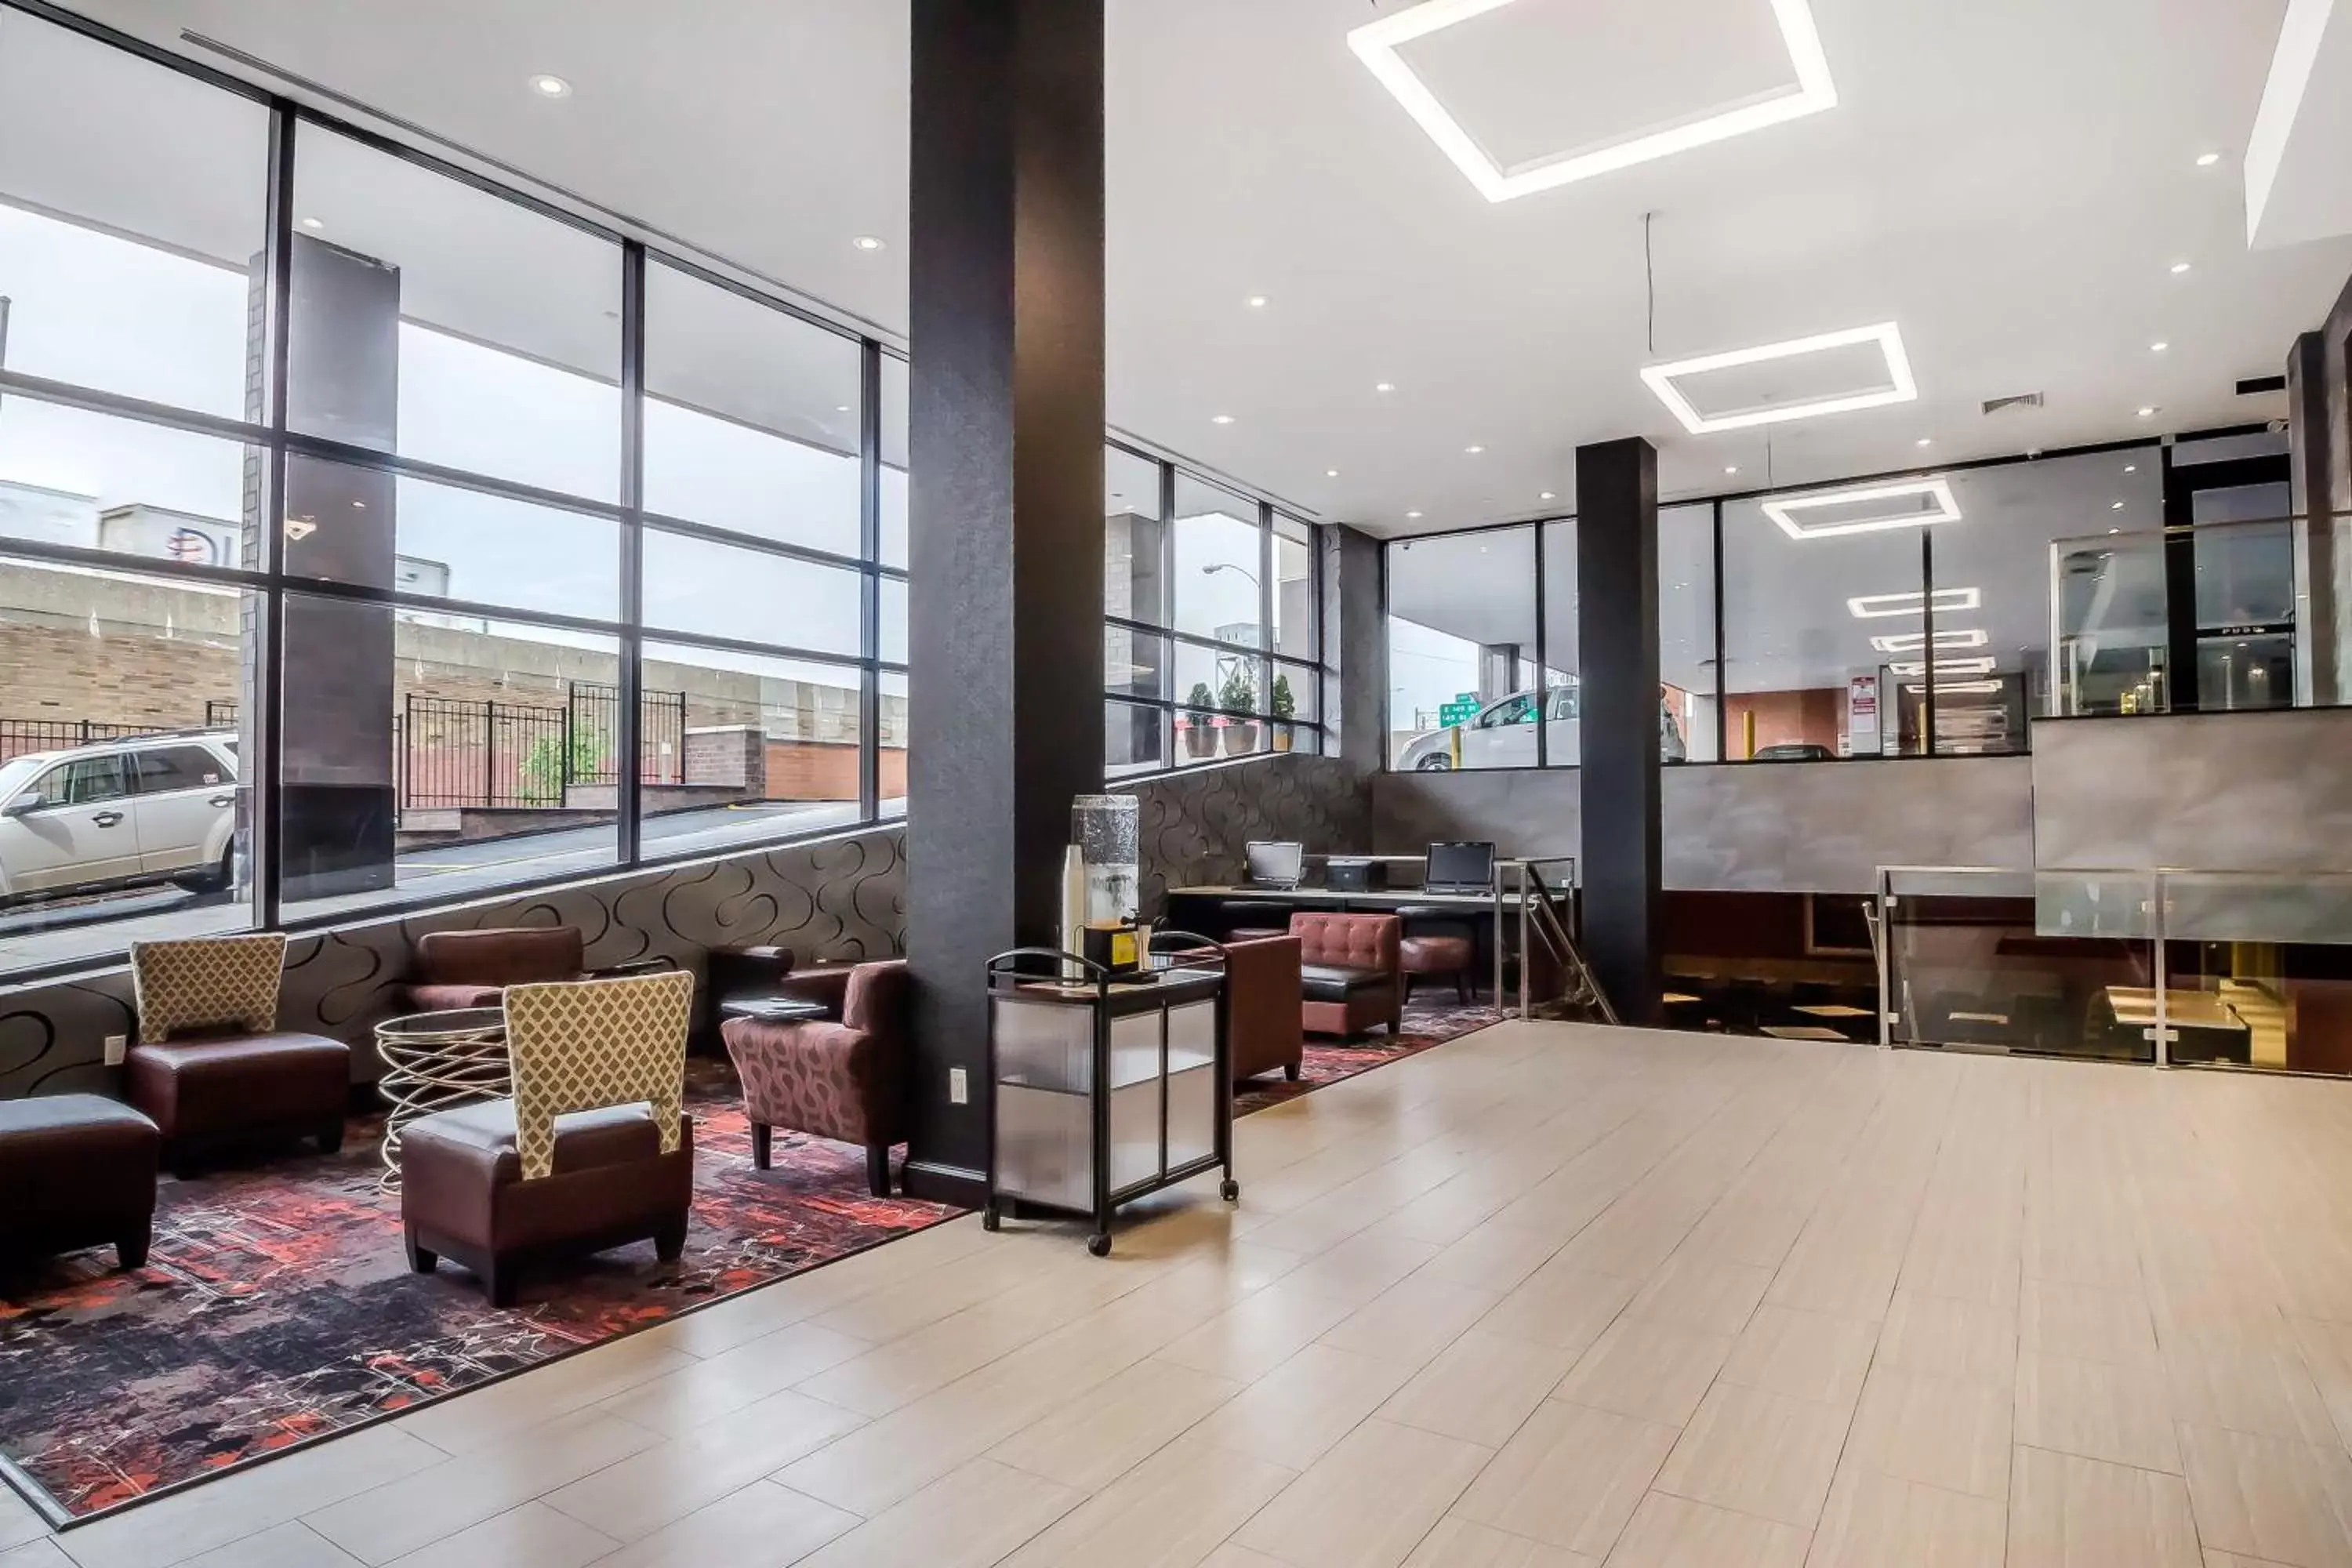 Lobby or reception in Comfort Inn & Suites near Stadium